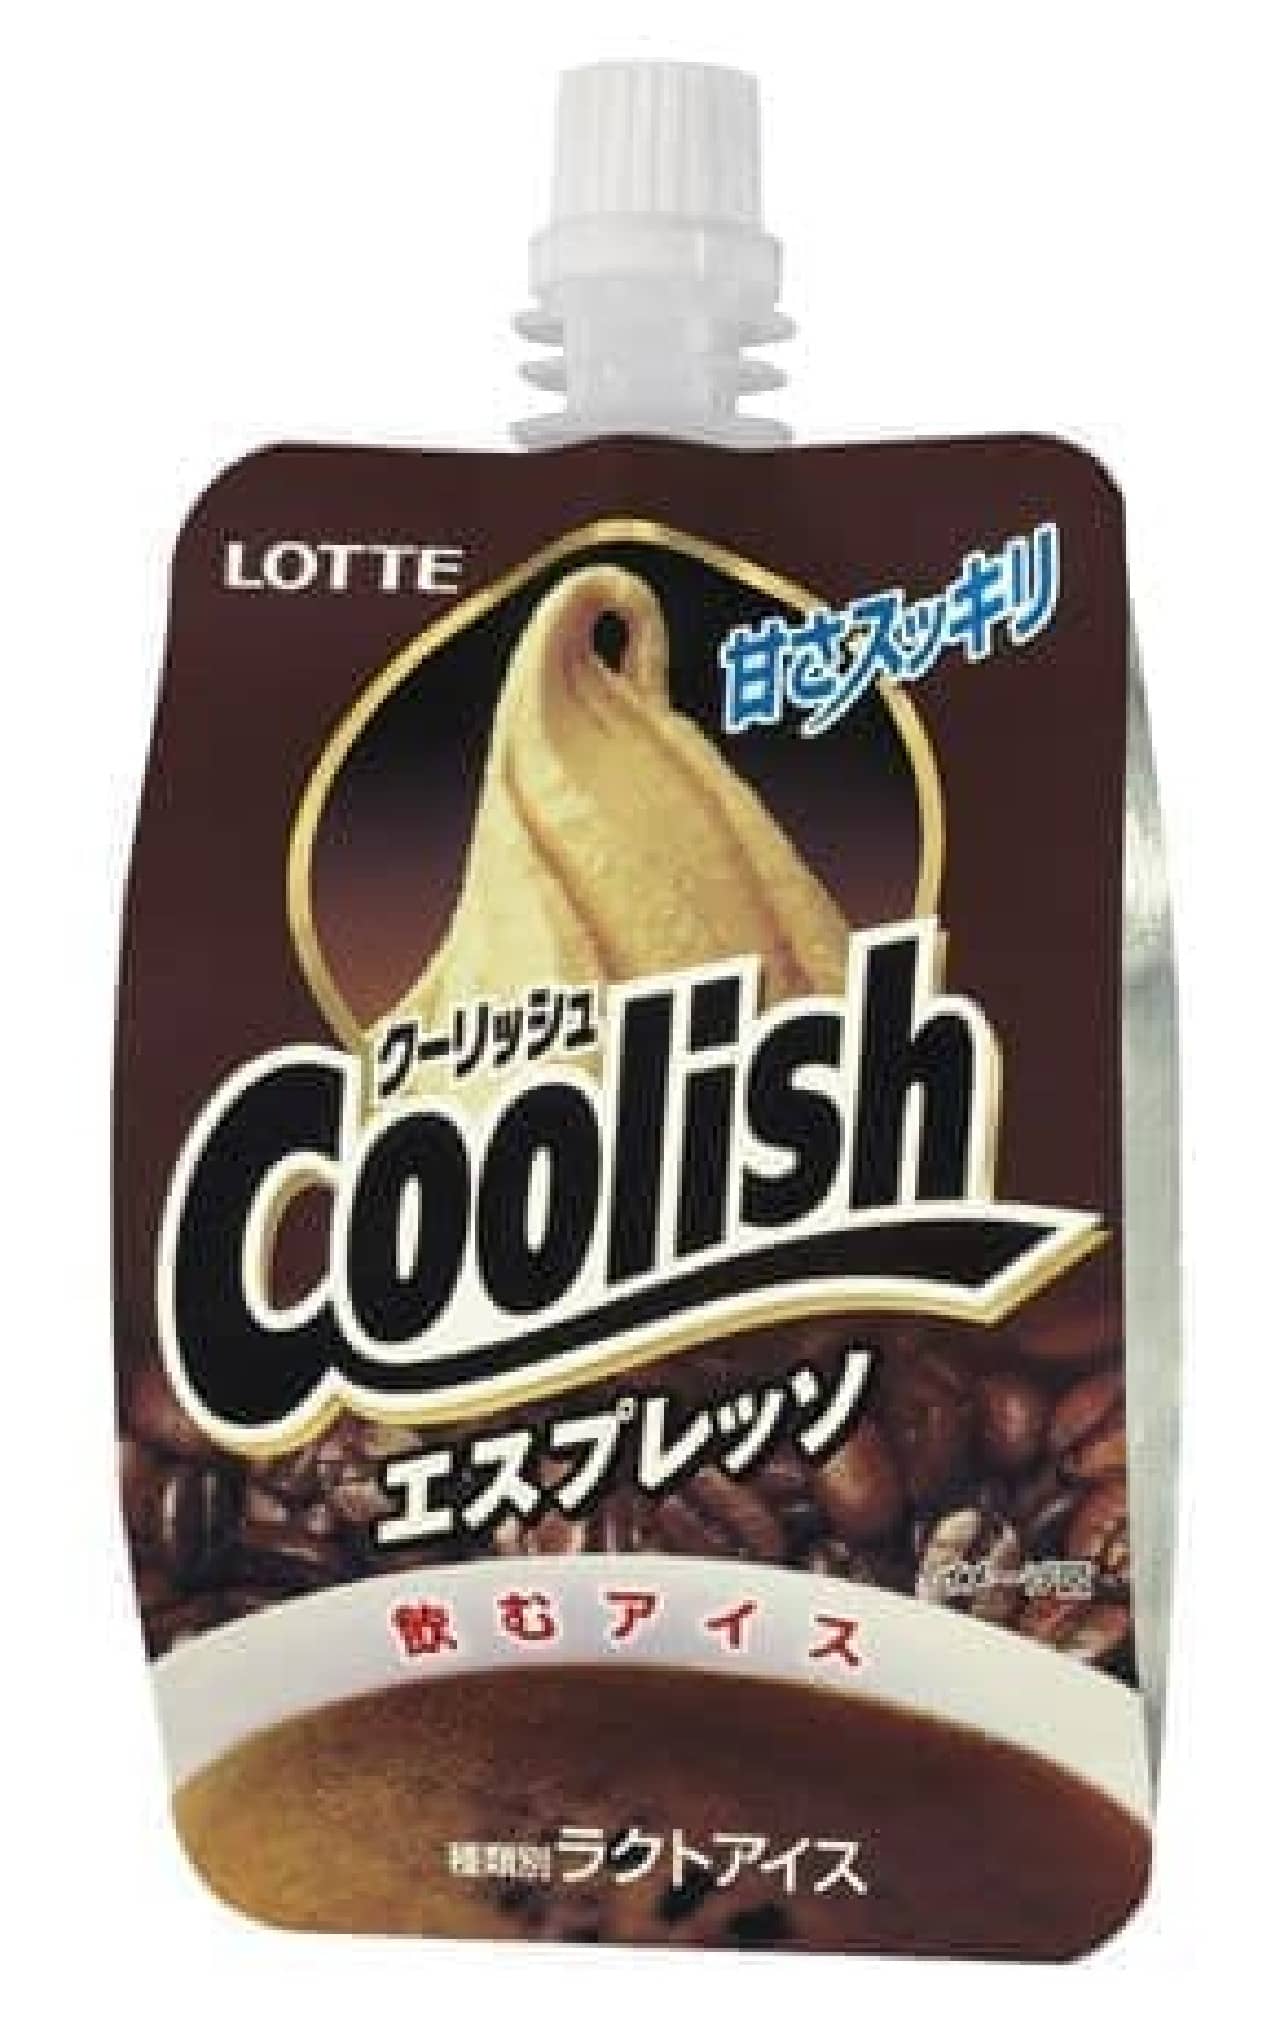 "Coolish espresso"